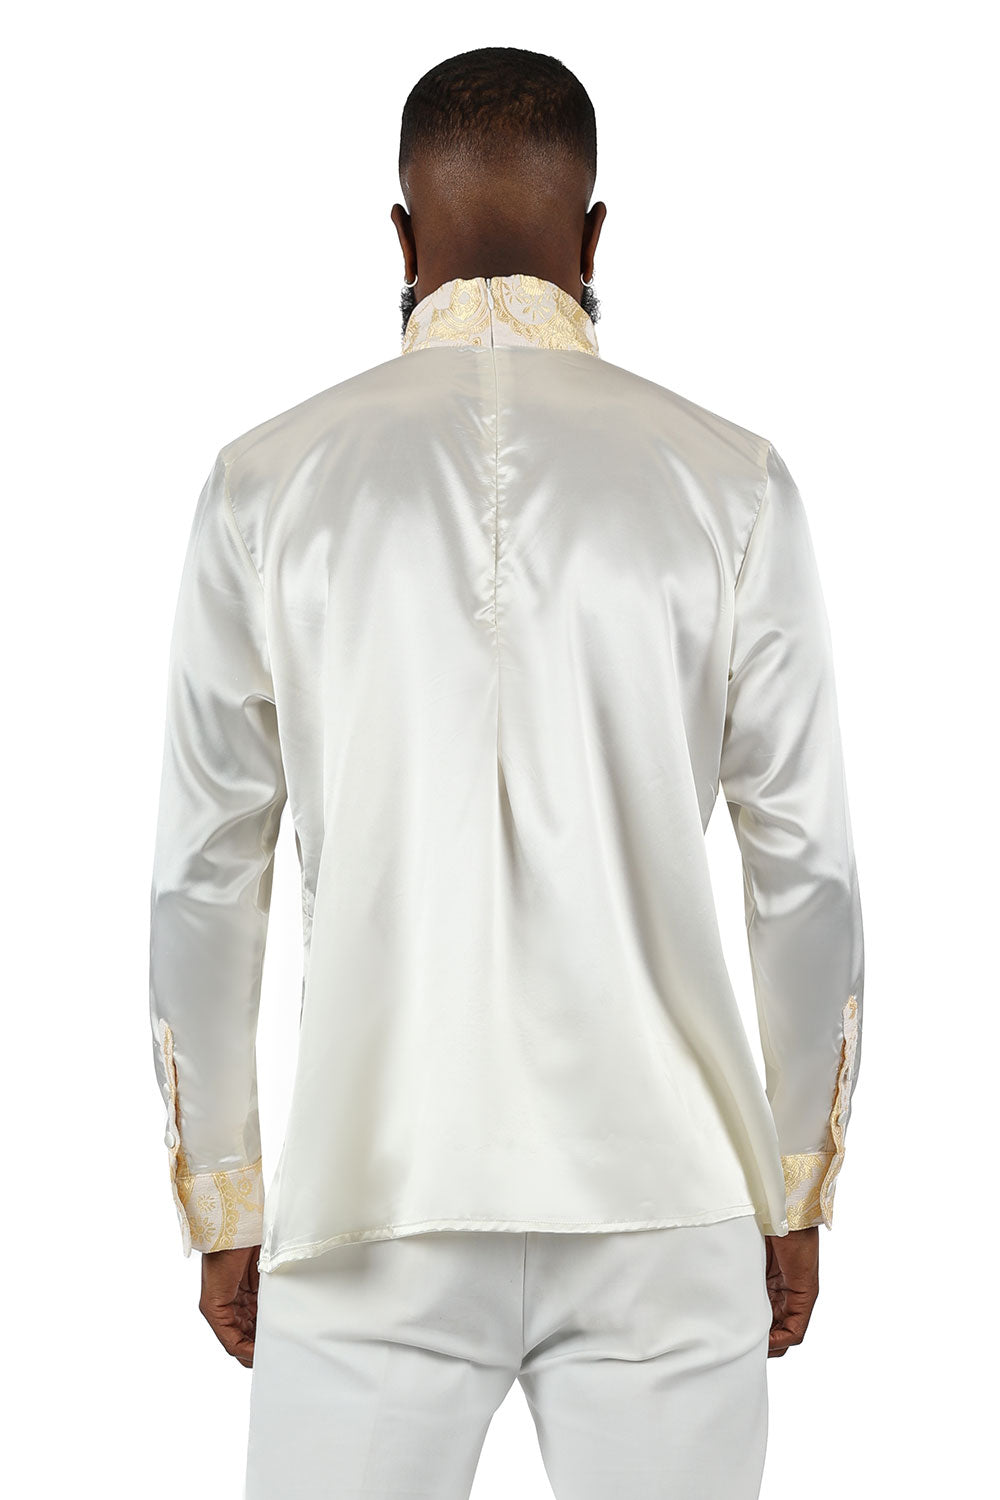 BARABAS Men's Paisley Long Sleeve Turtle Neck shirt 3MT05 Gold